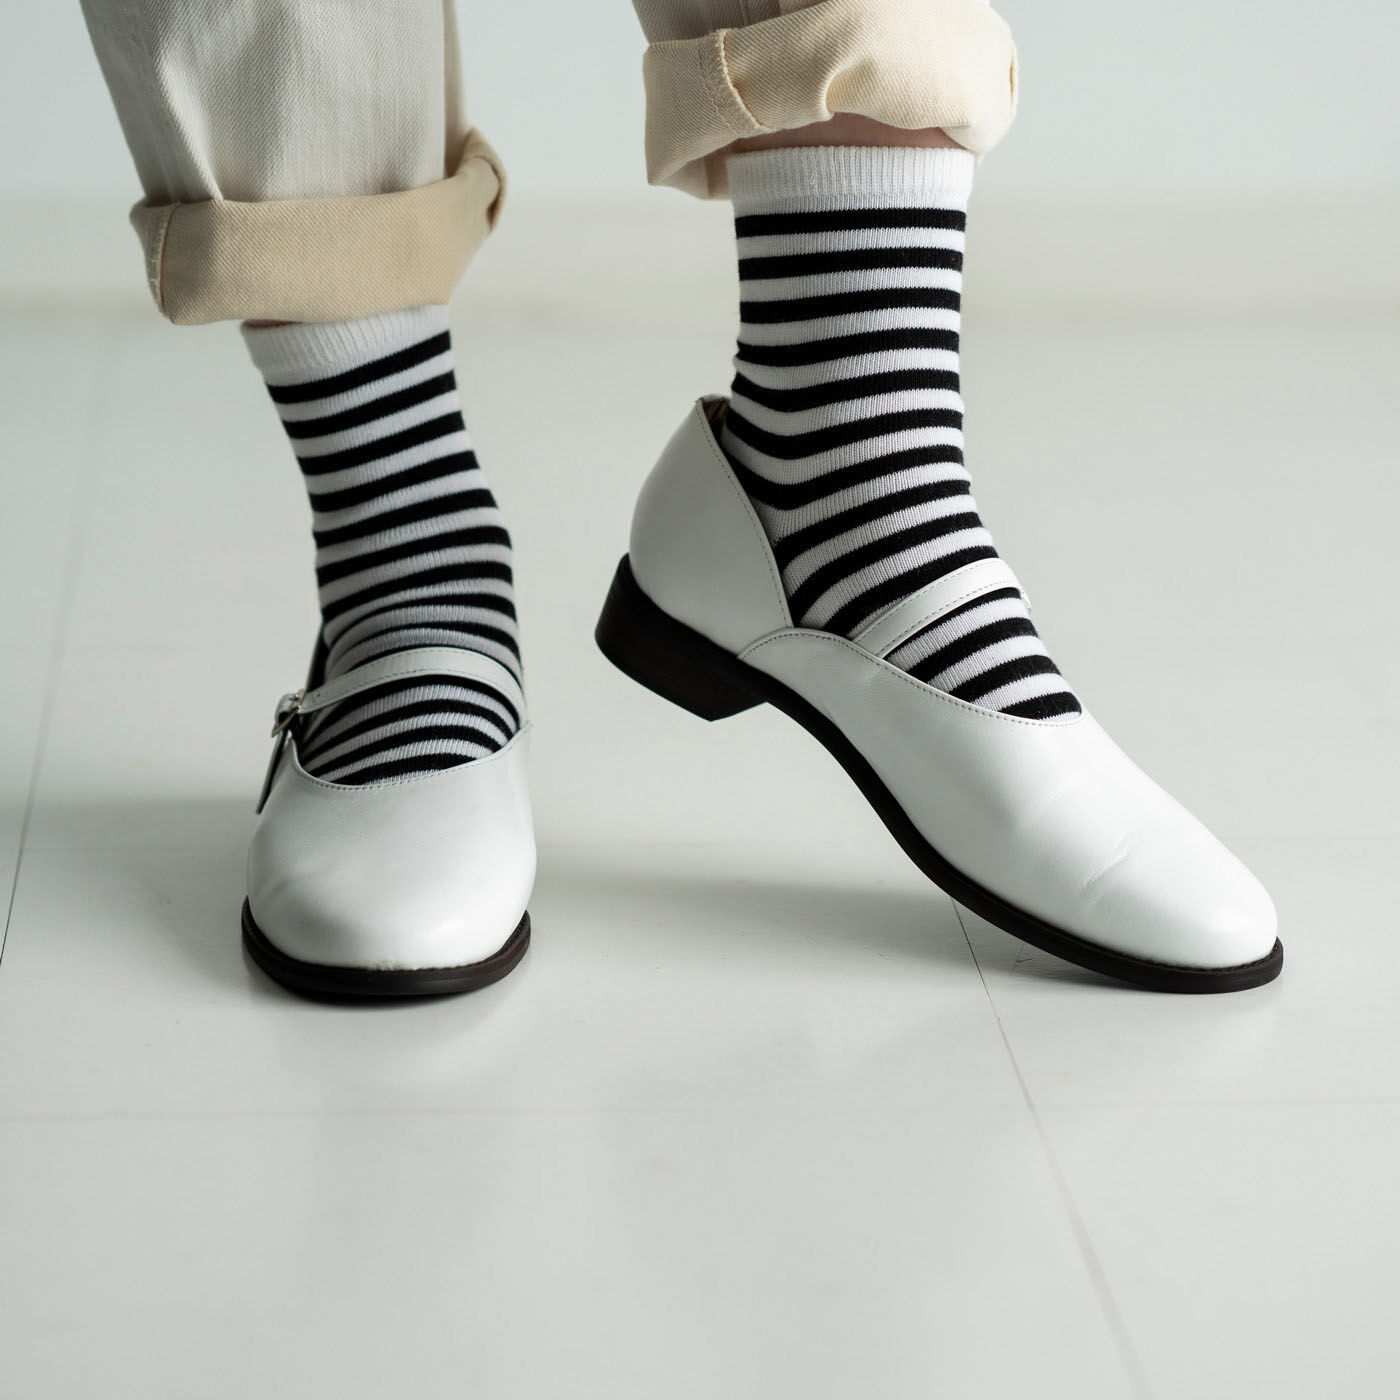 ＆Stories|靴デザイナーの理想で作った 職人本革のレジェルテシューズ〈ホワイト〉|どこから見ても美しい、端正な表情が魅力のシューズ。